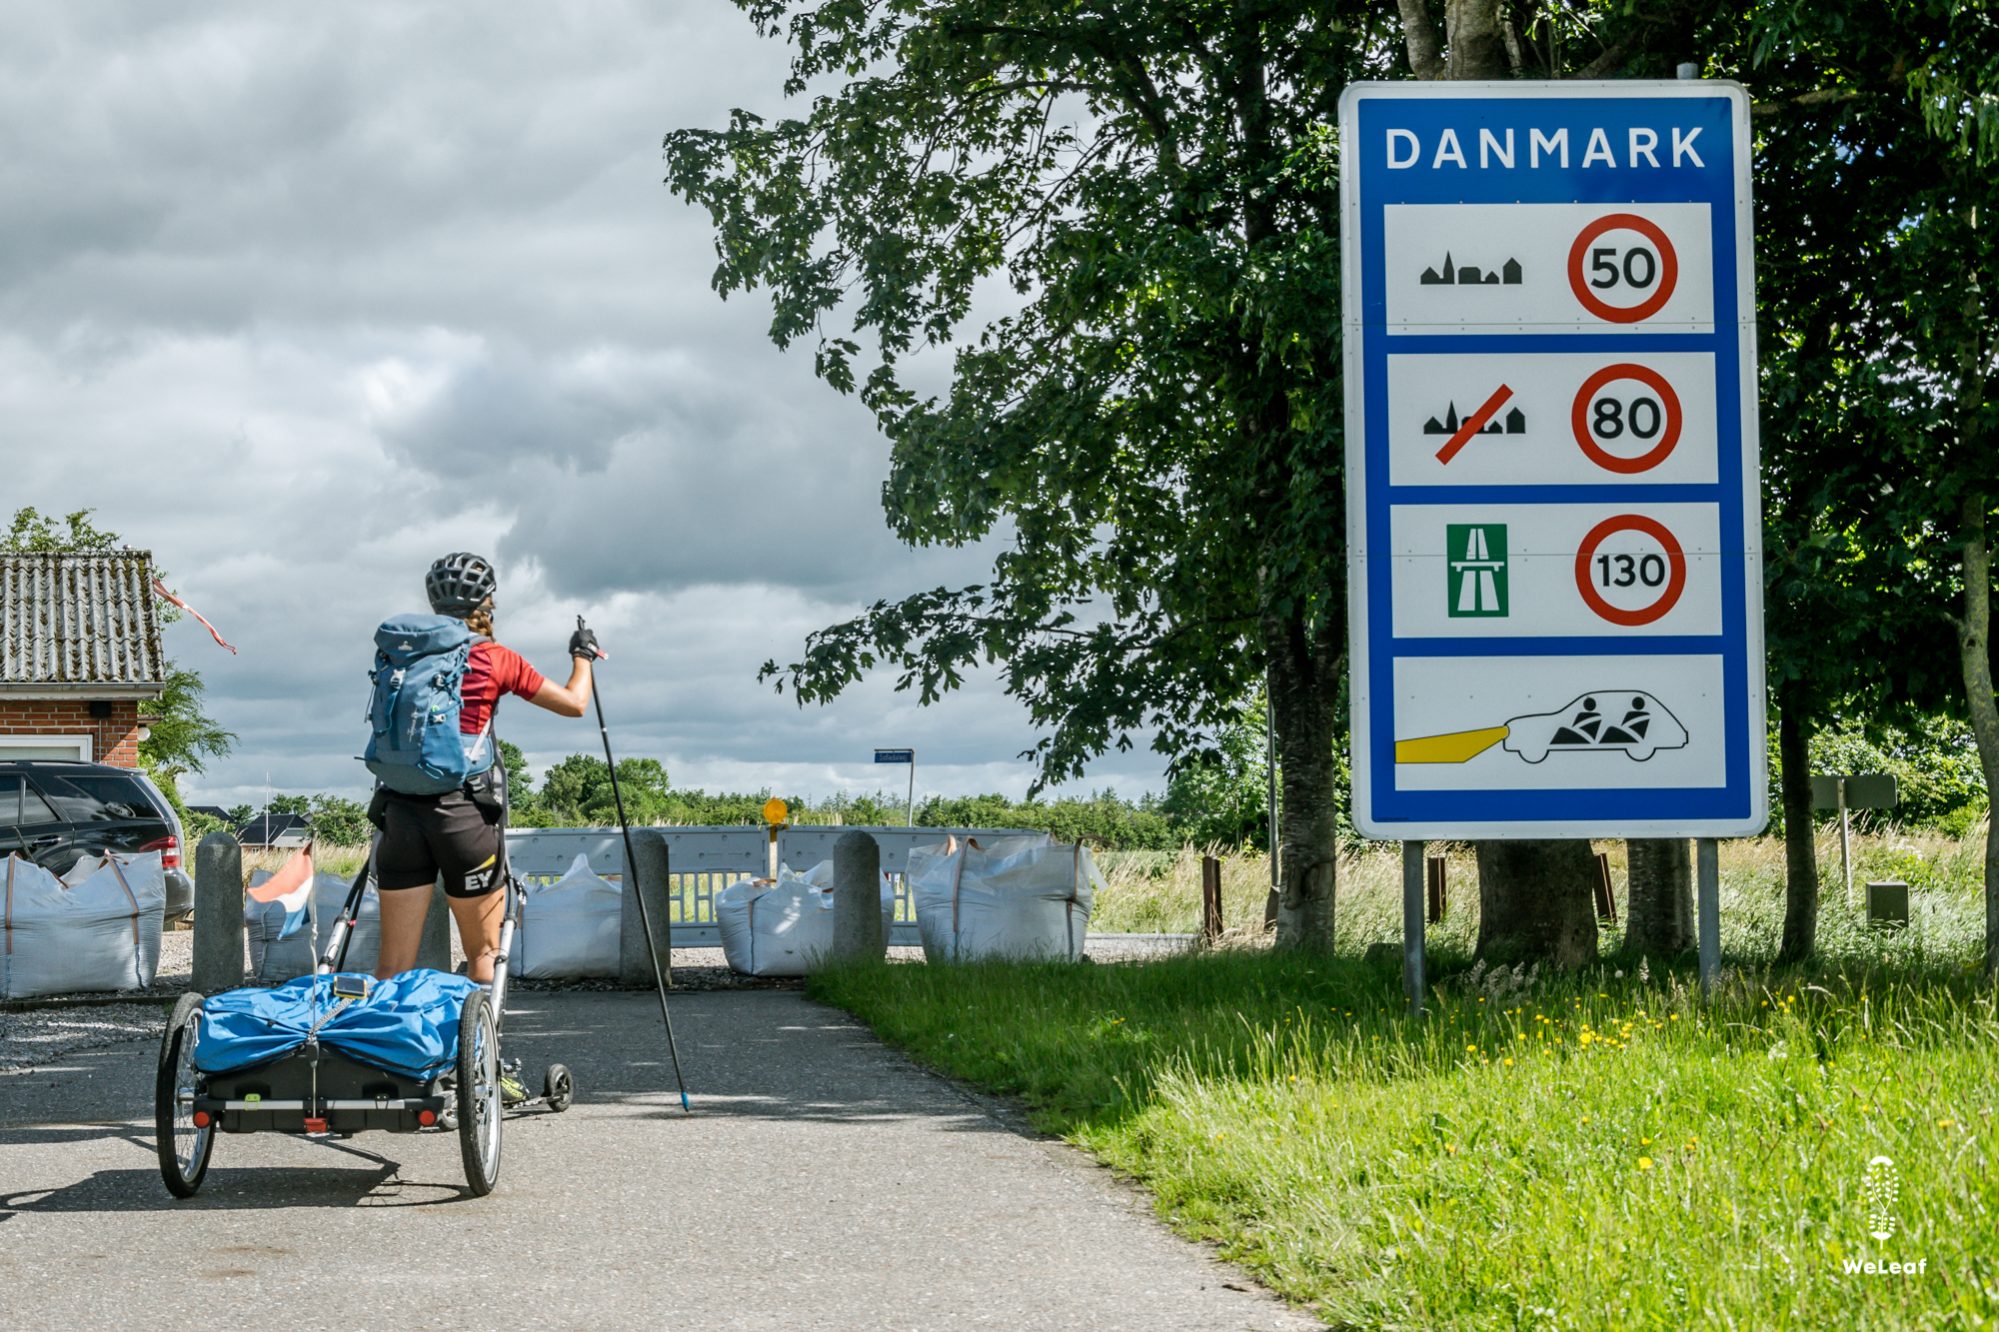 10 fun facts on Denmark